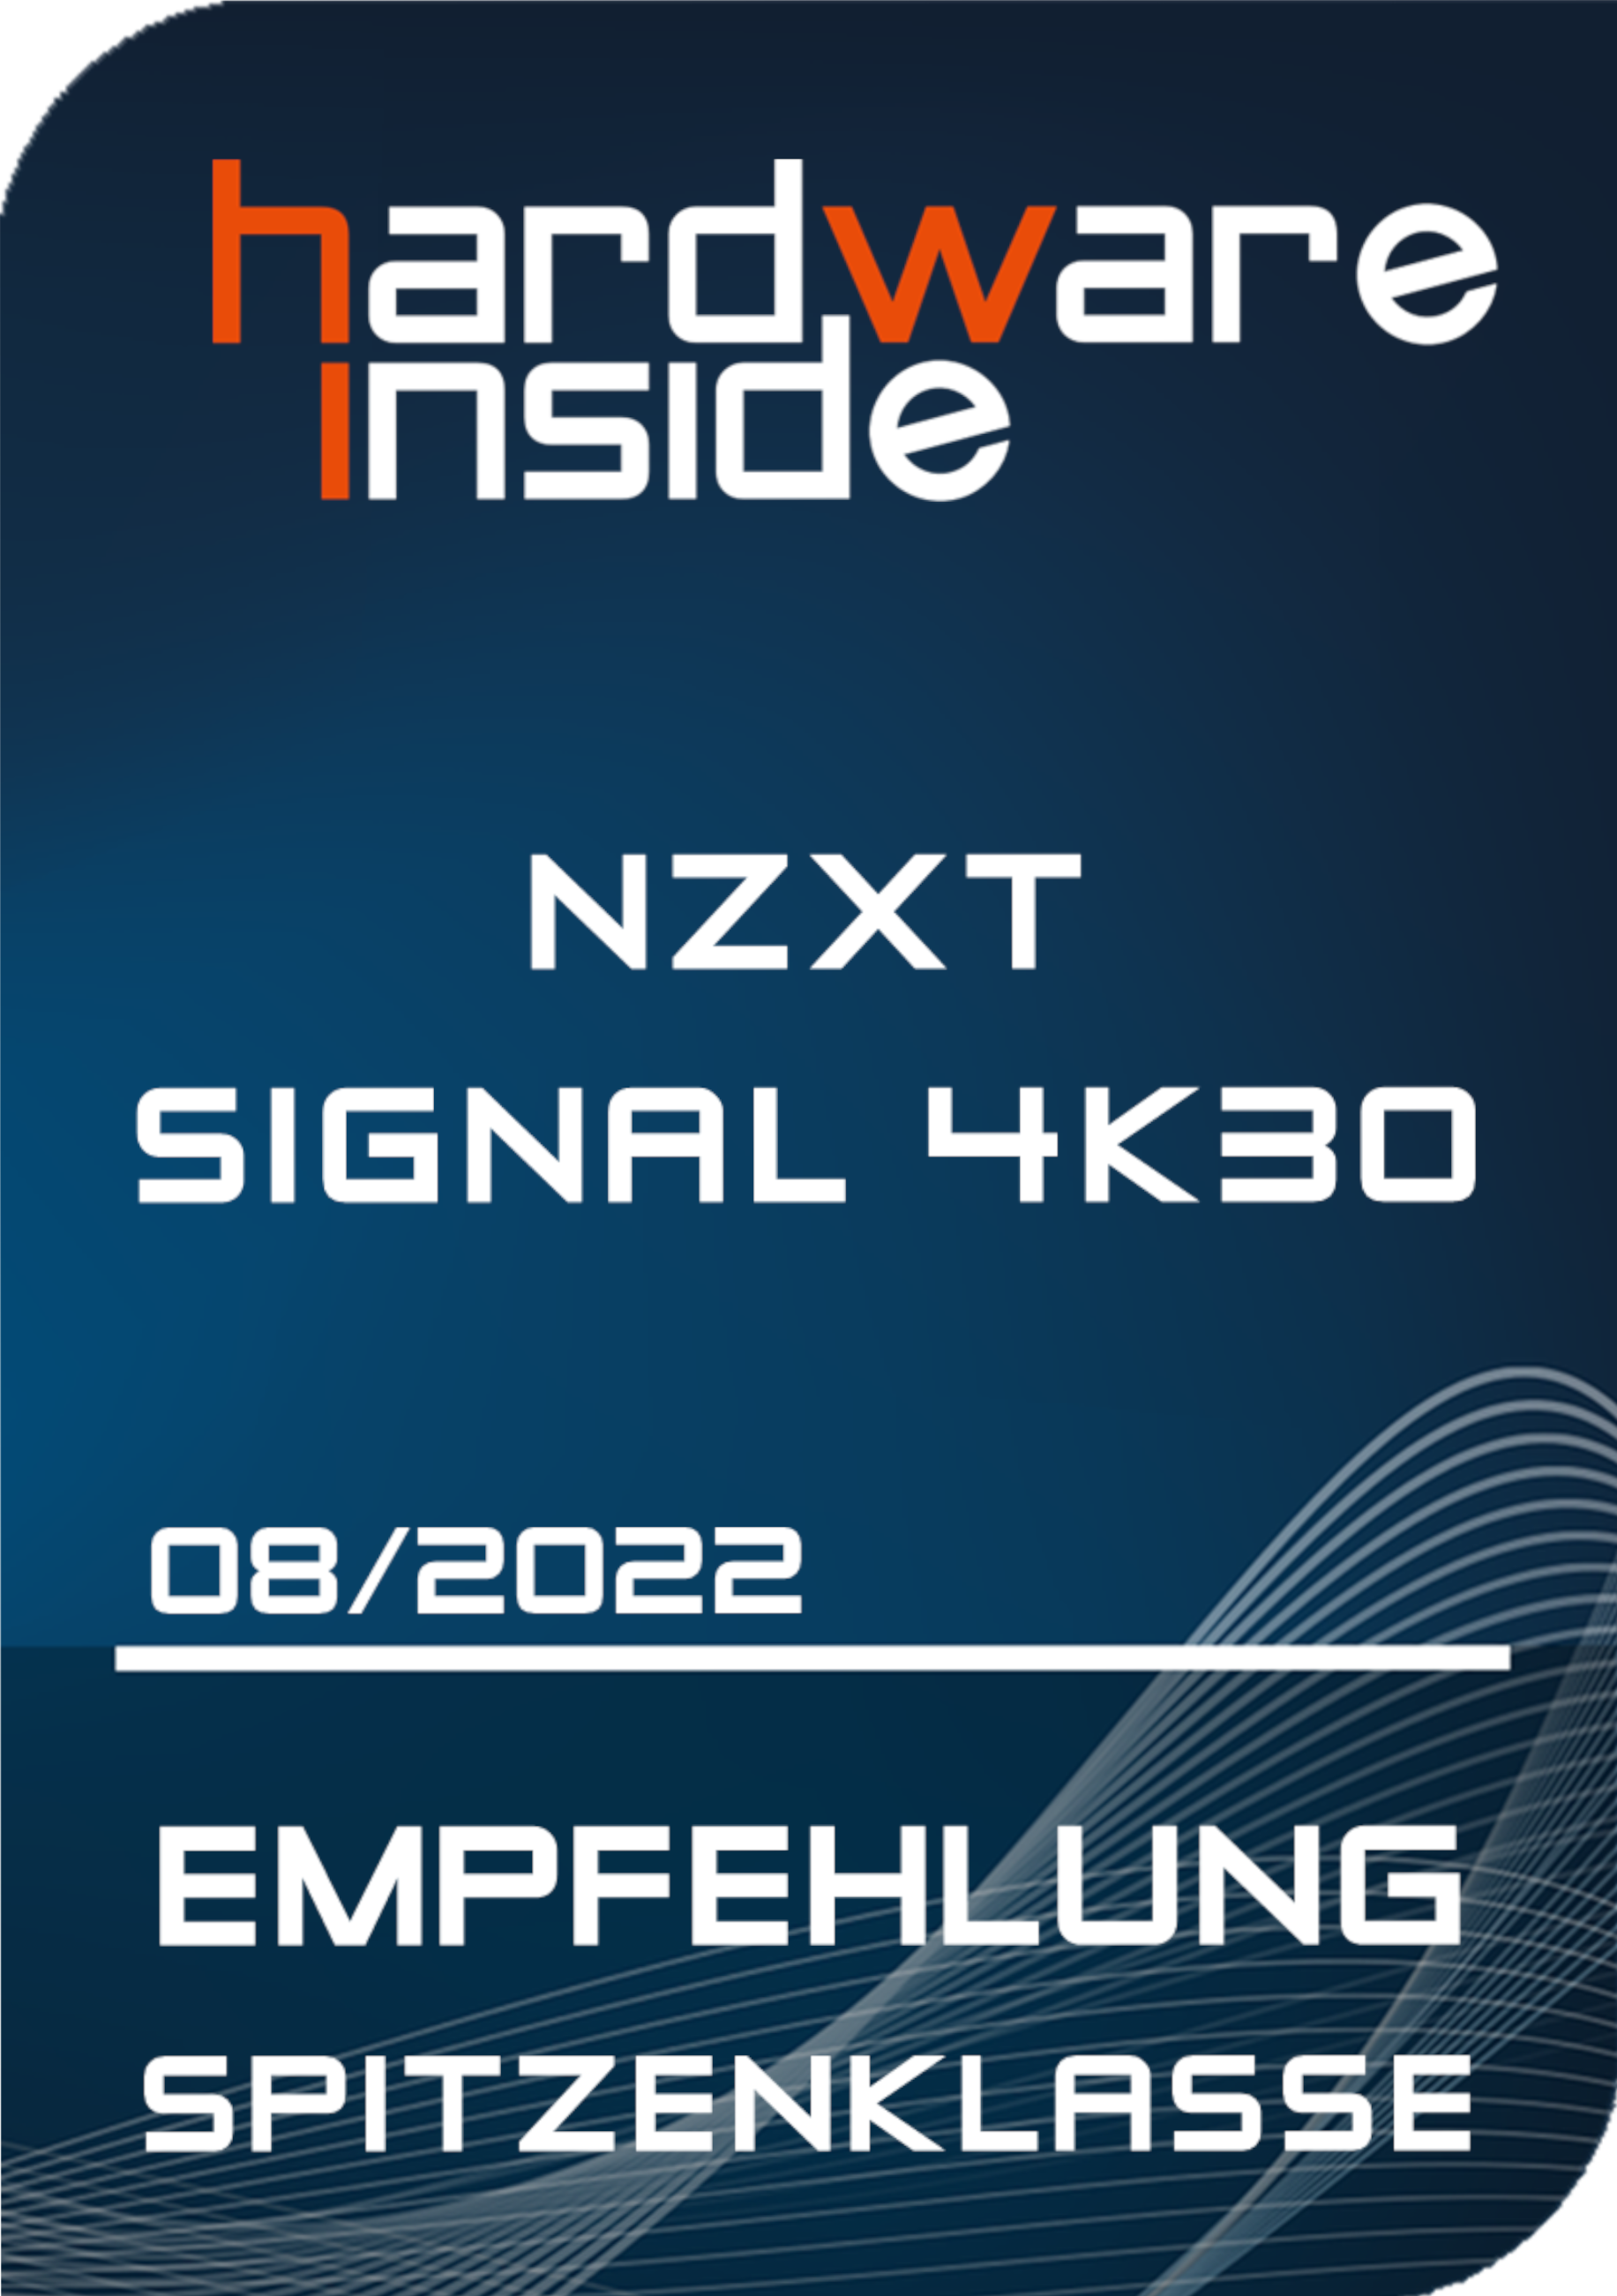 nzxt_signal_4k30_award_big.png